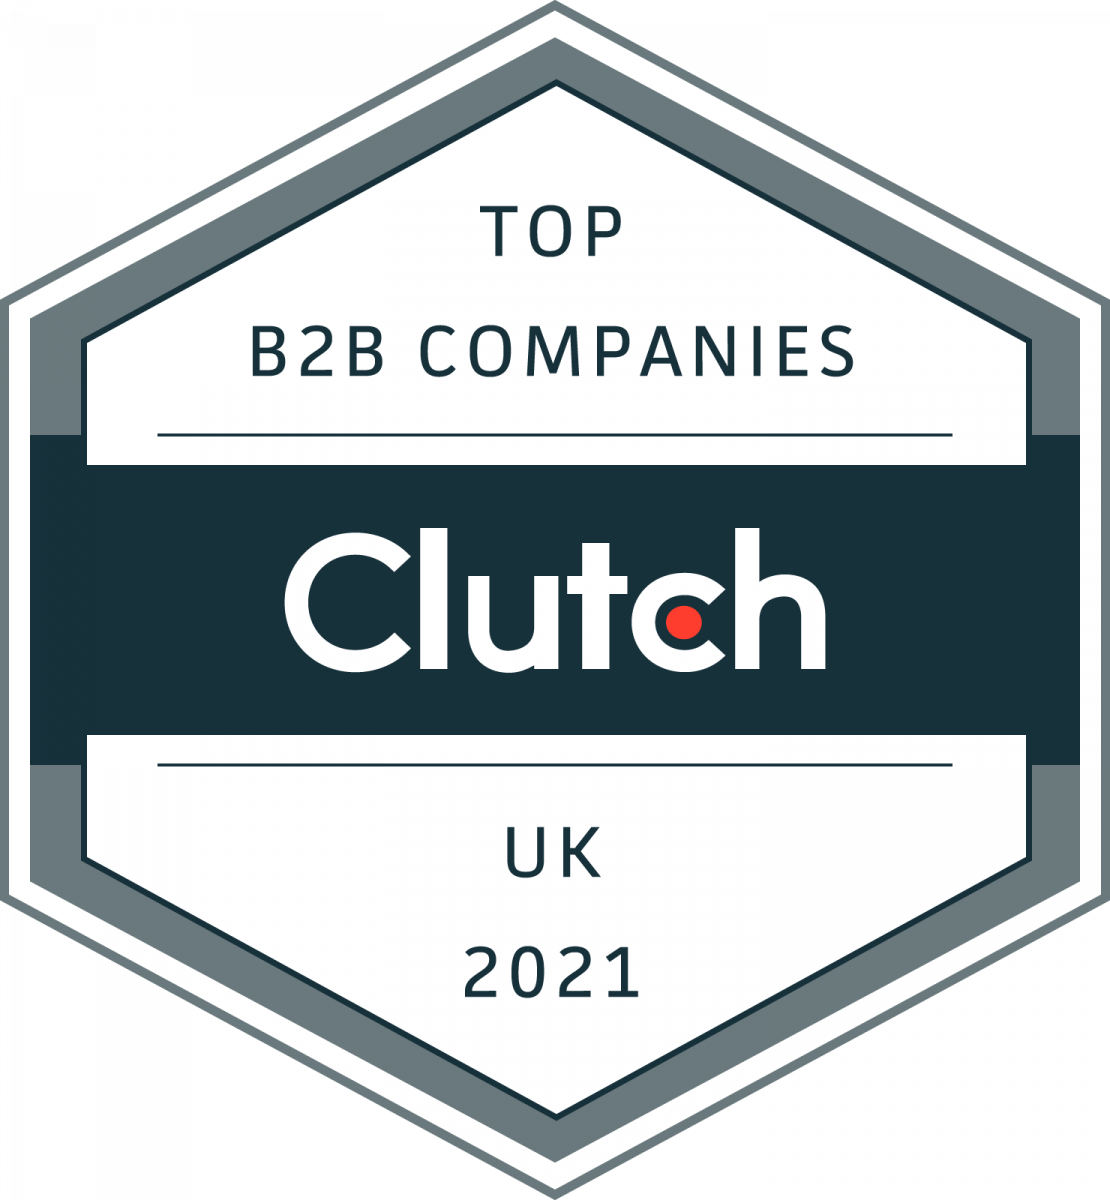 Top B2B Companies UK 2021